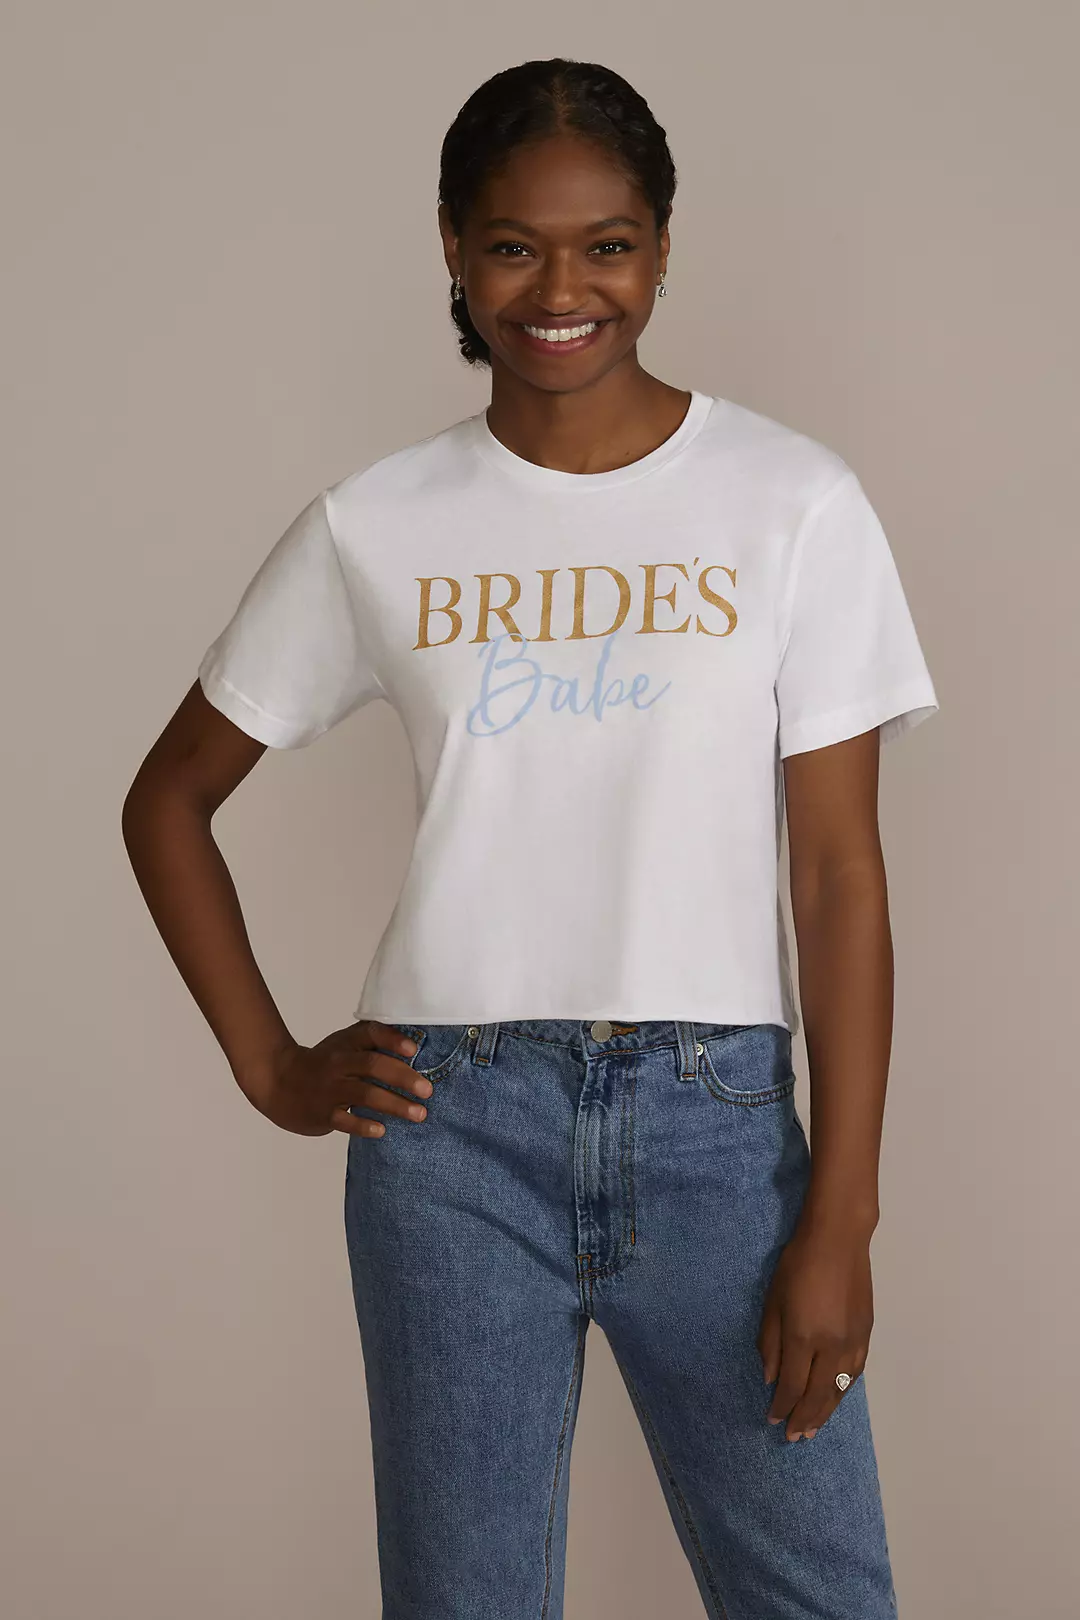 Brides Babe T-Shirt Image